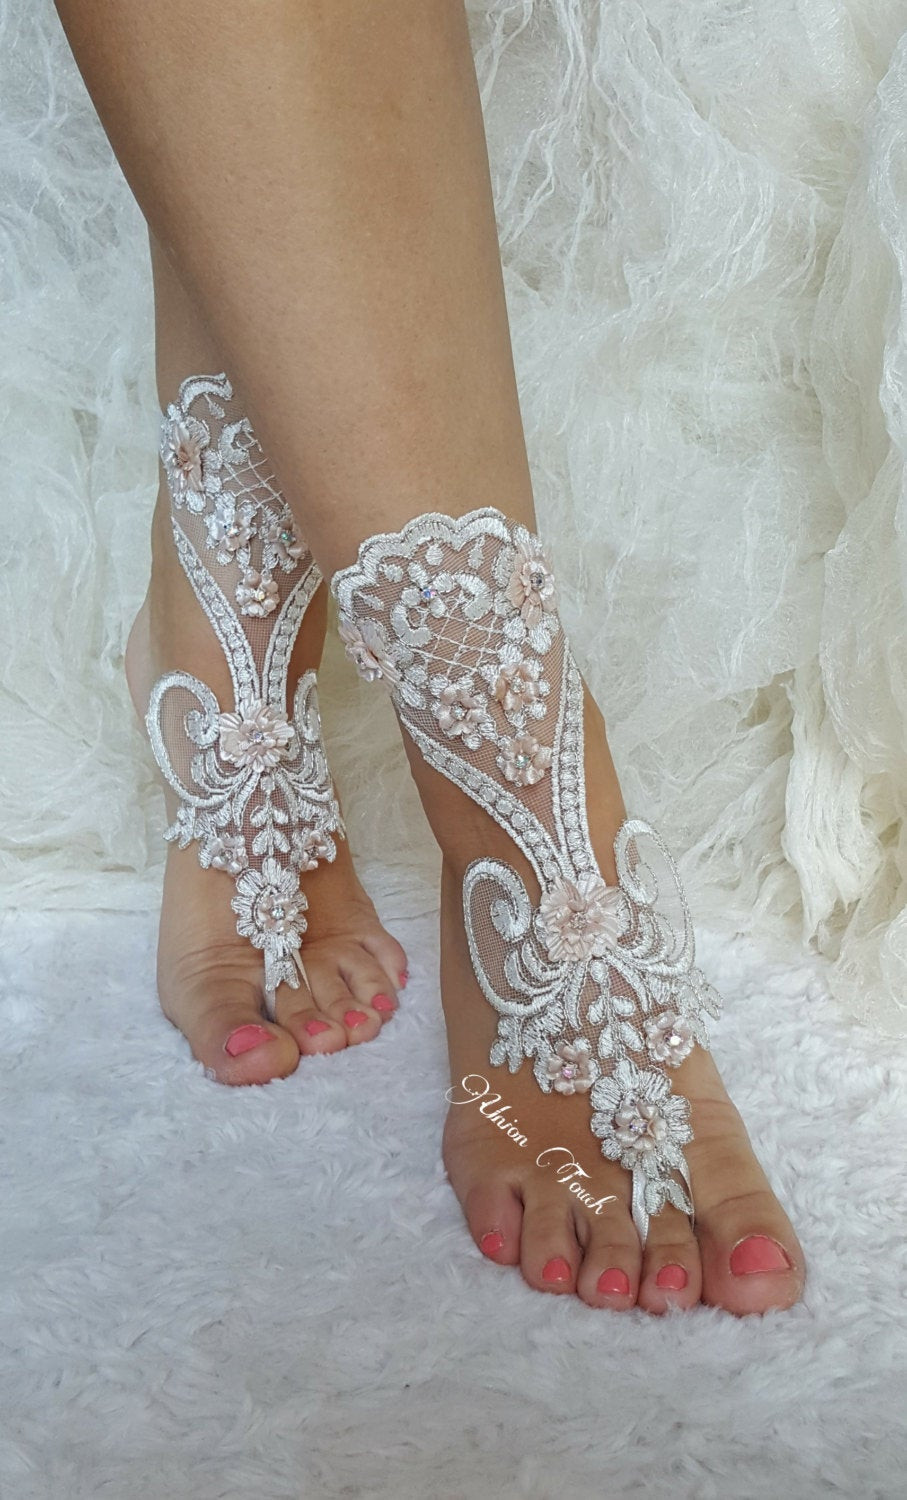 Beach Wedding Sandals For Bride
 Ivory Silver Lace Barefoot Beach wedding barefoot sandals